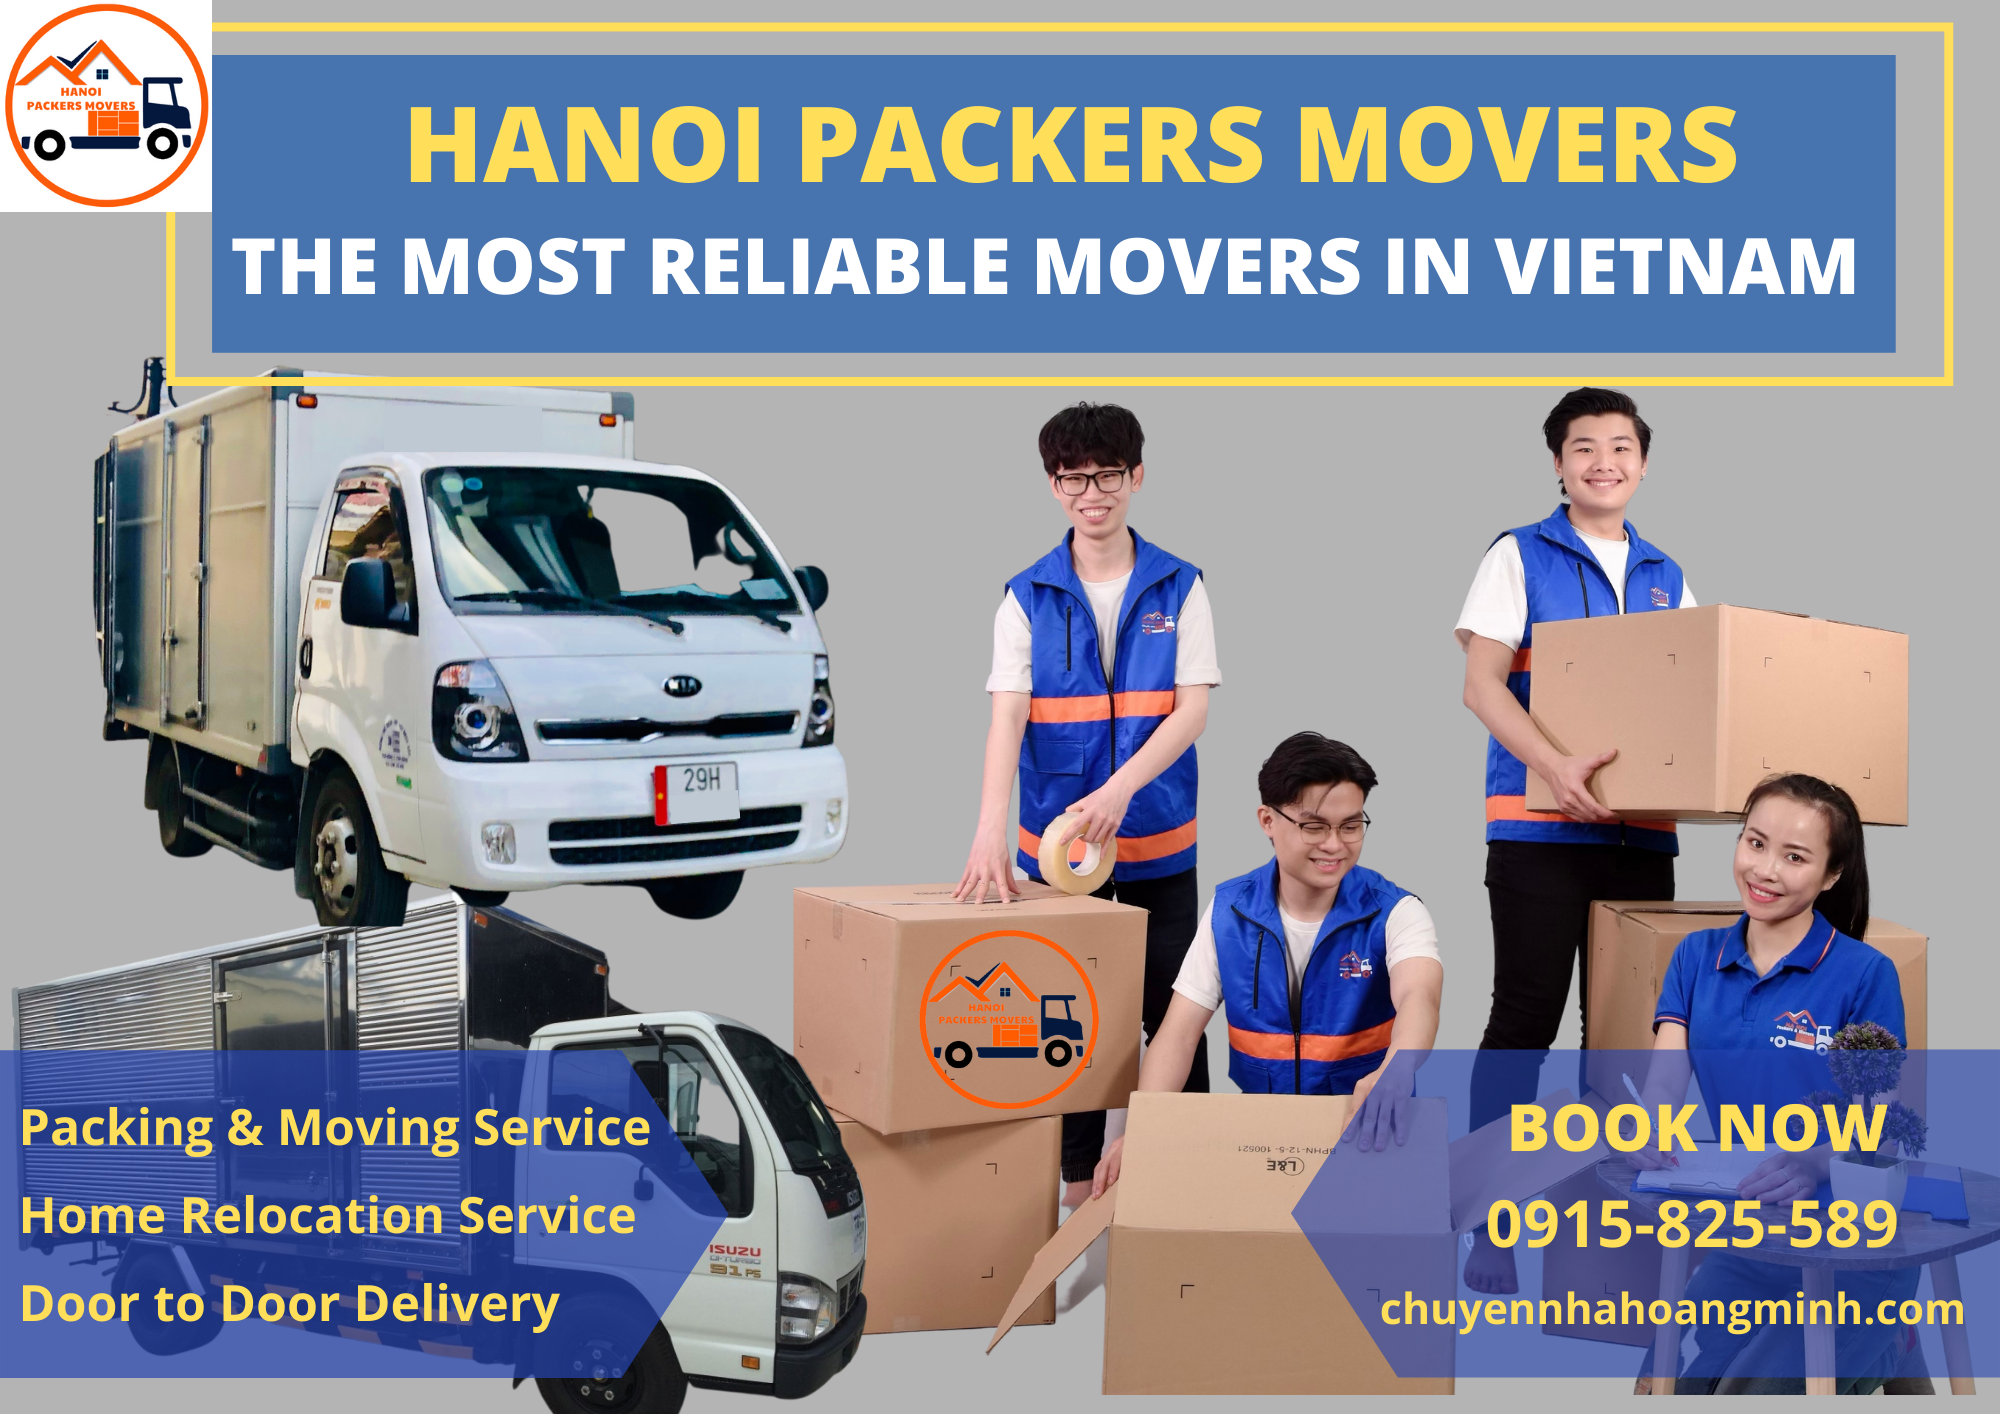 Hanoi Packers Movers